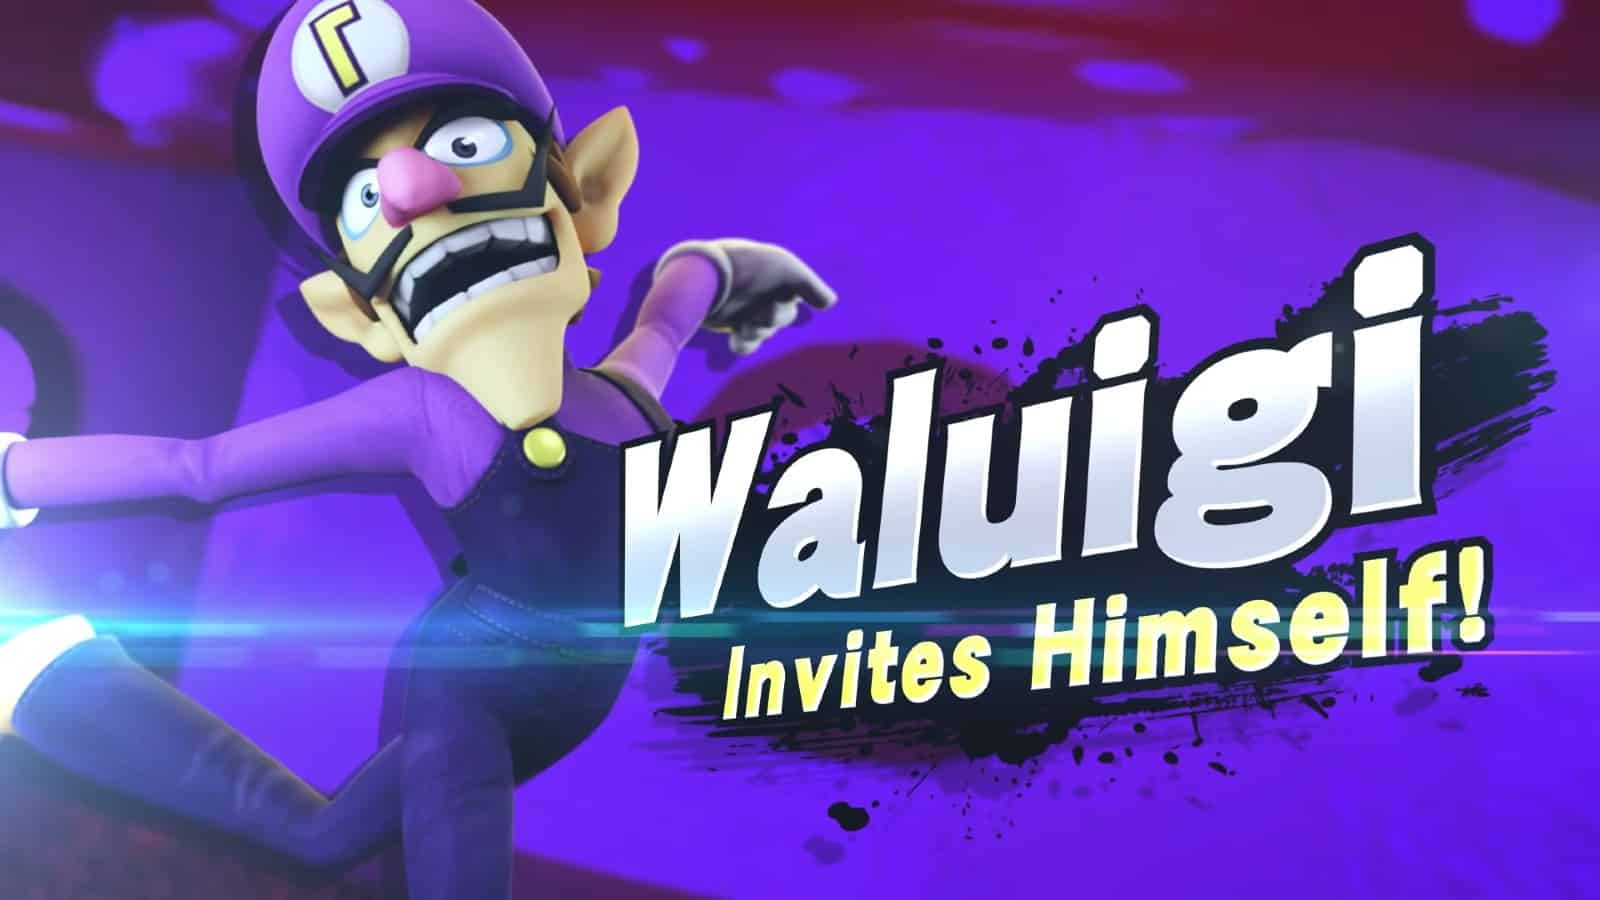 Waluigi invites himself to Smash